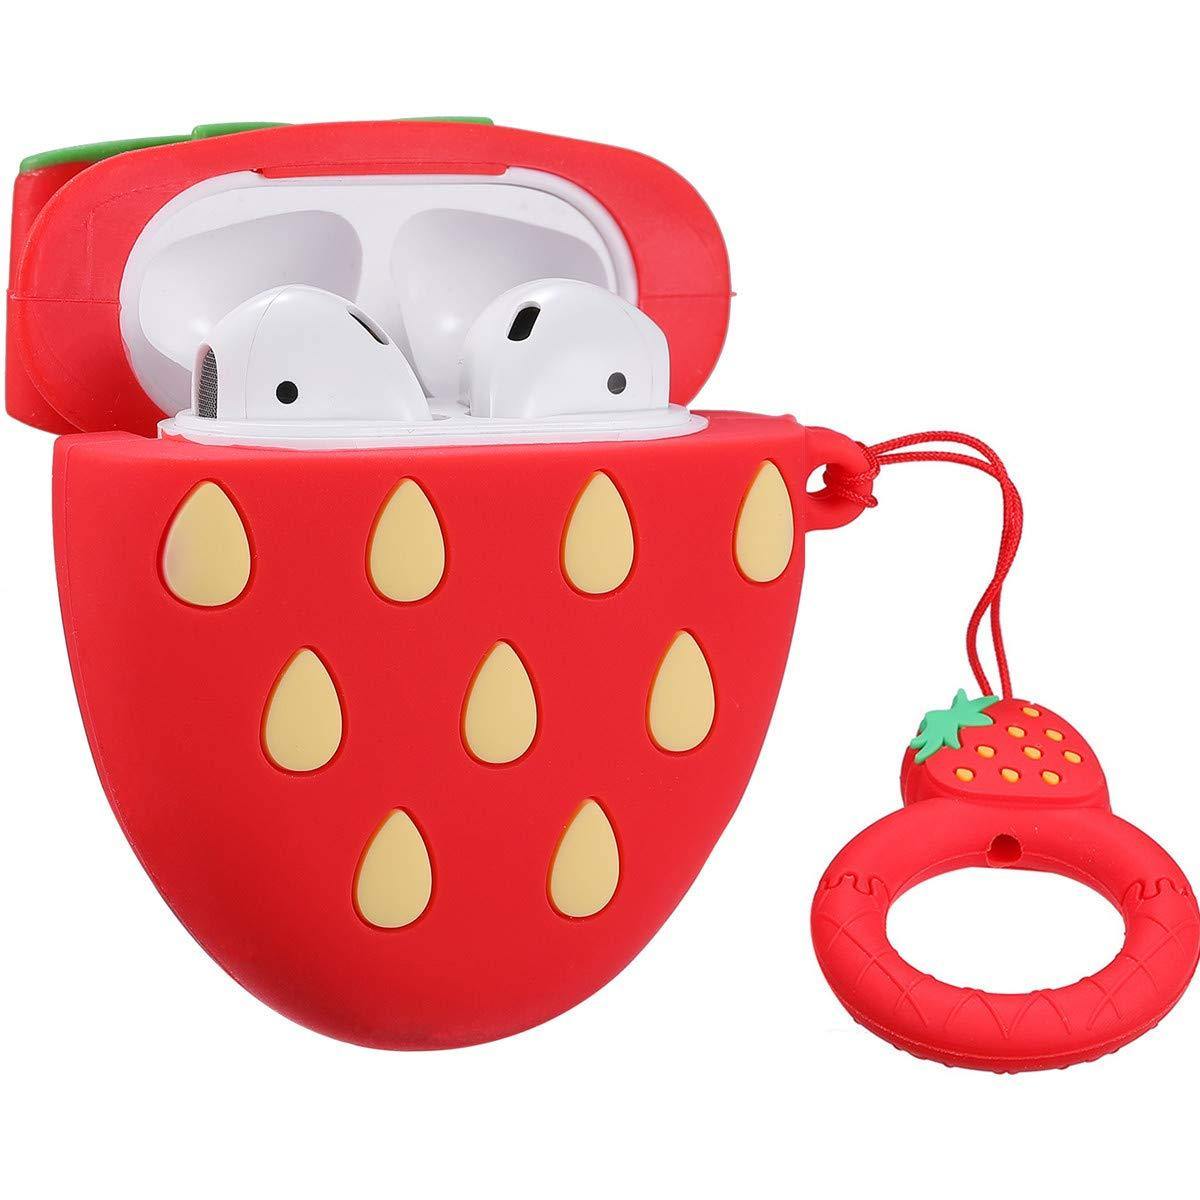 Strawberry Apple Airpods Case - Lottemi